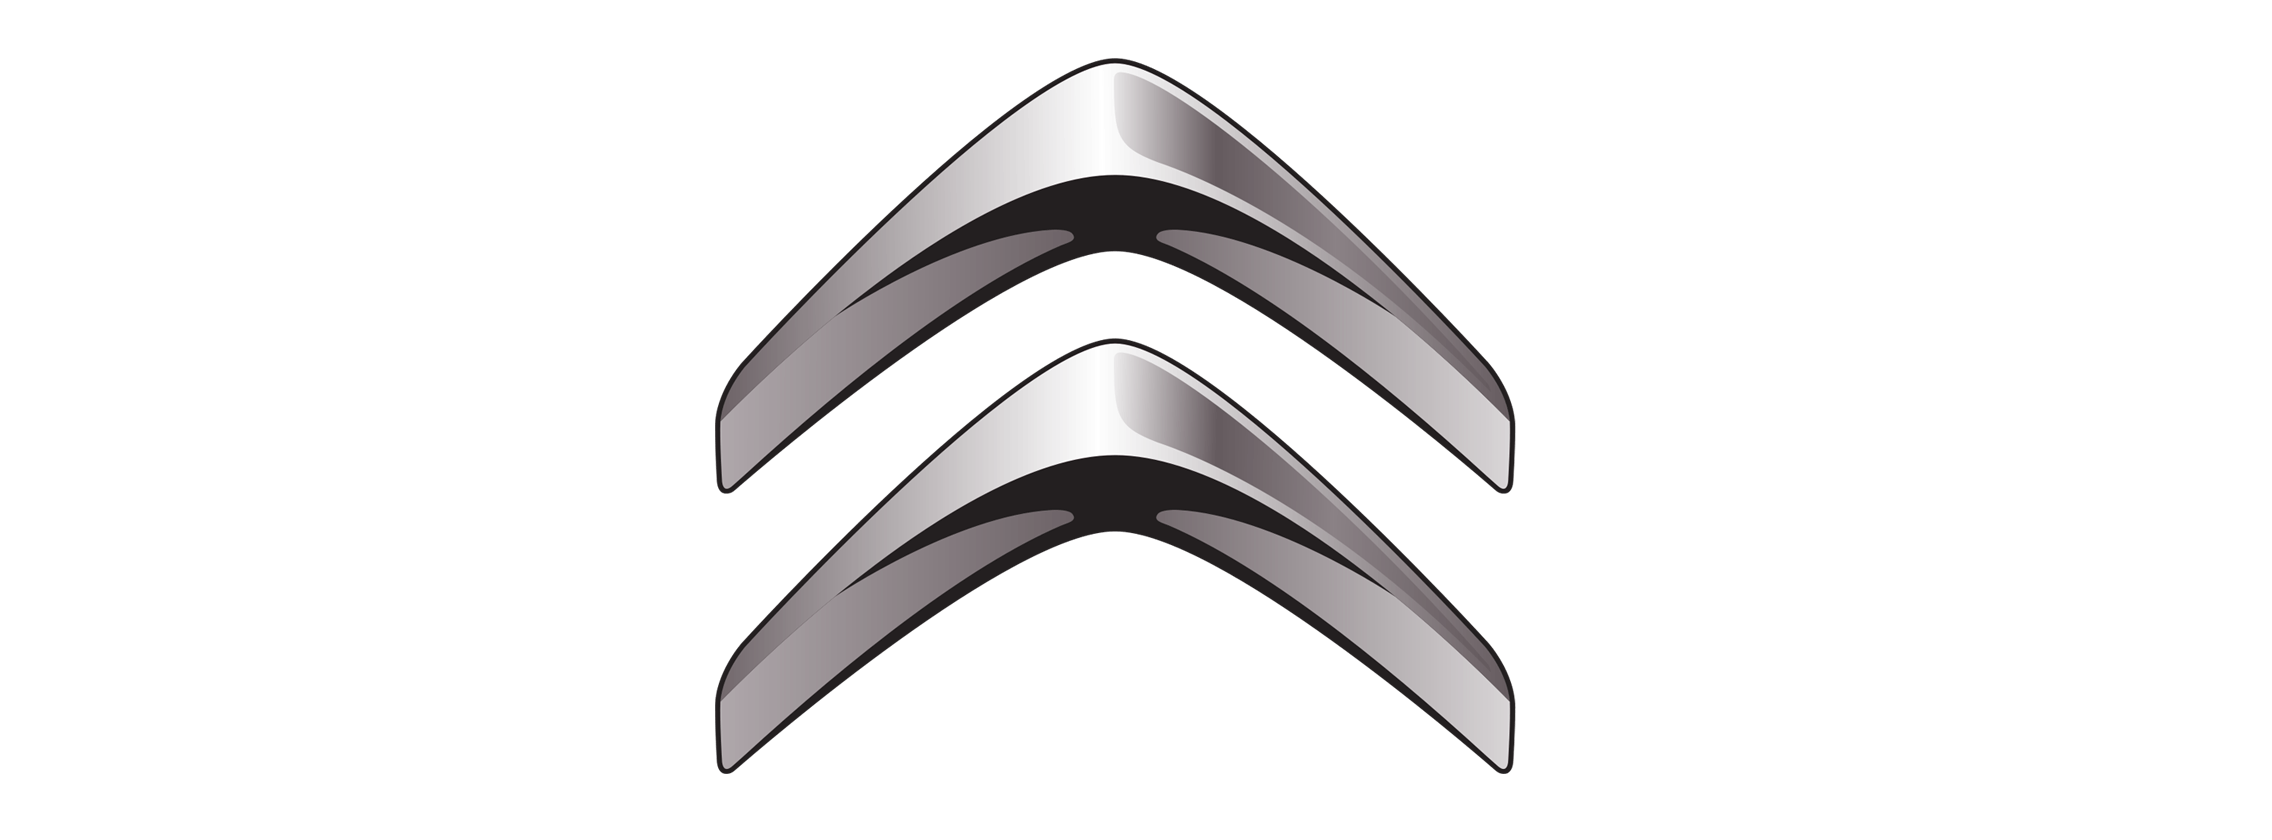 Citroen Logo - Citroën Logo Meaning and History, latest models. World Cars Brands